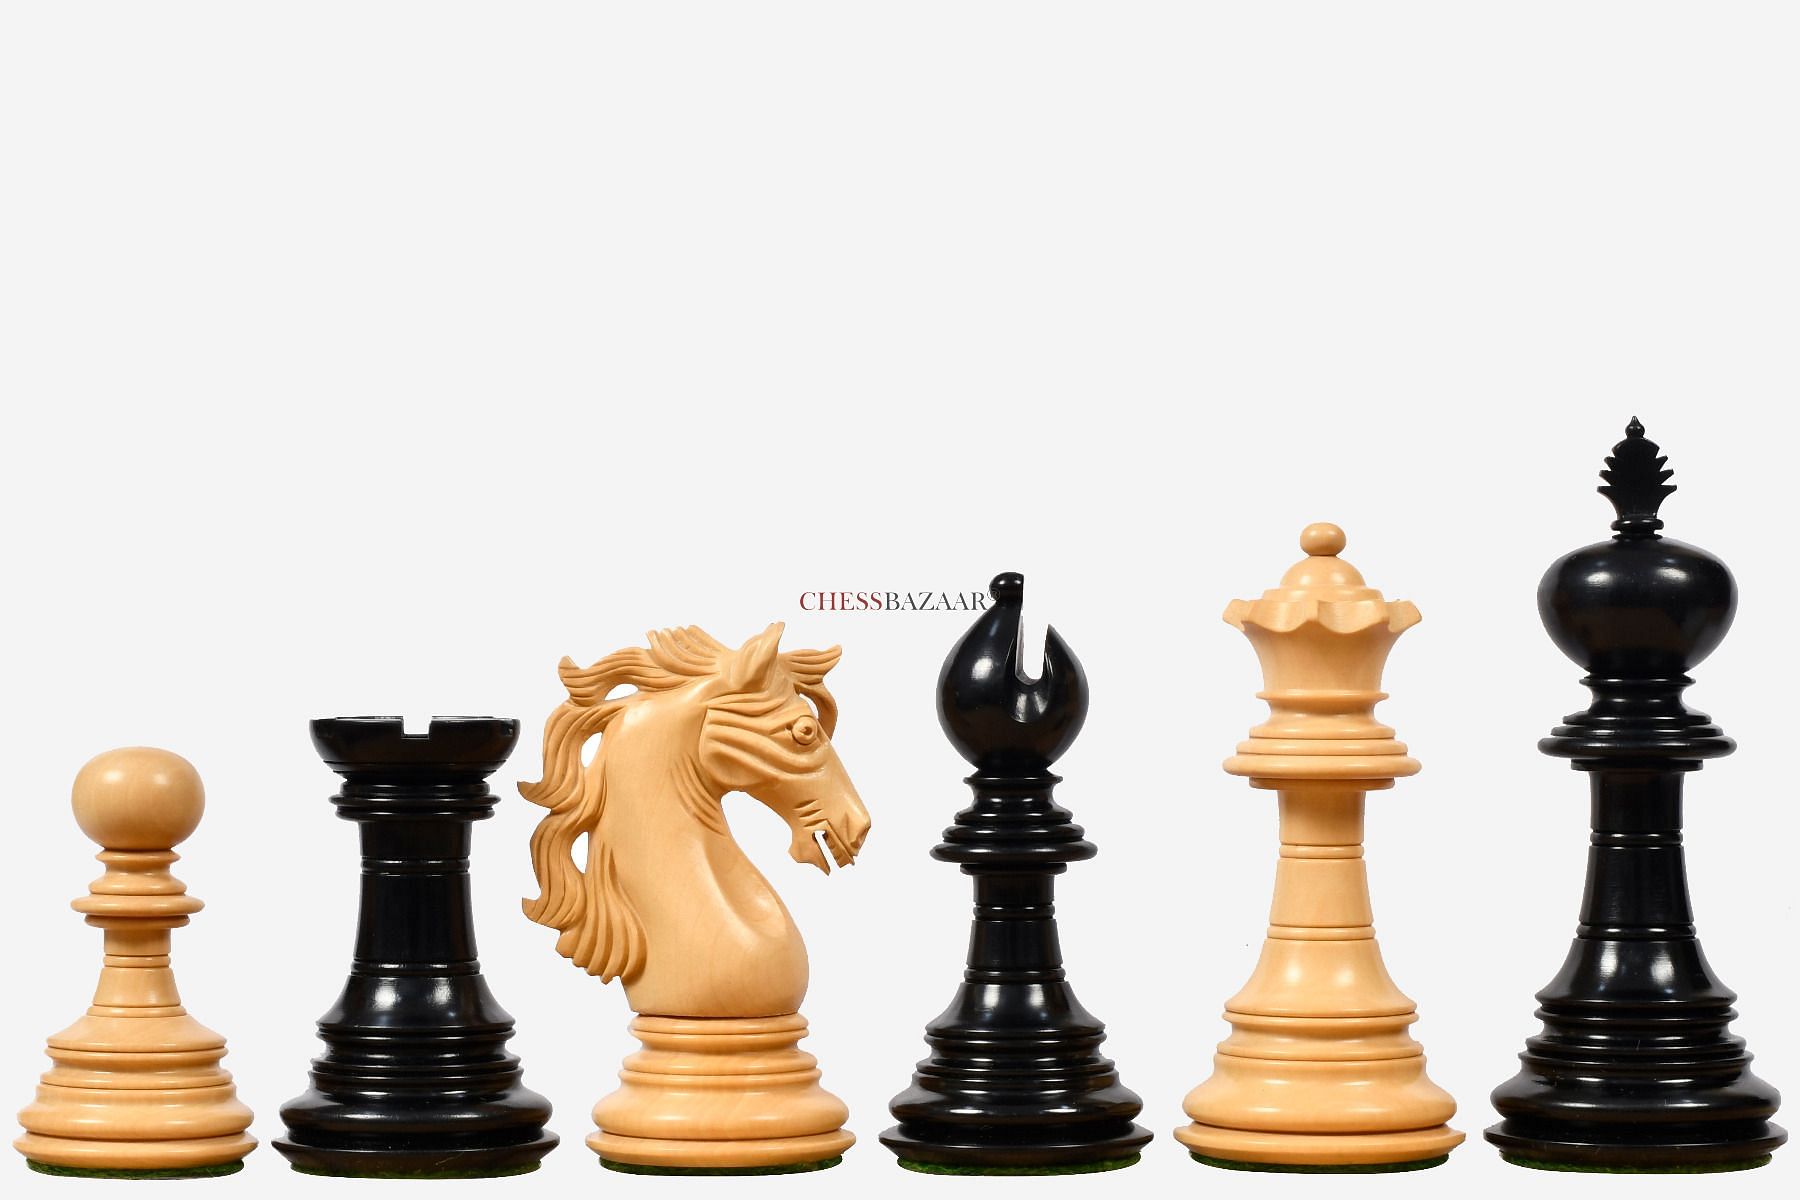 Buy American Adios Series Luxury Chess Pieces in Ebony.